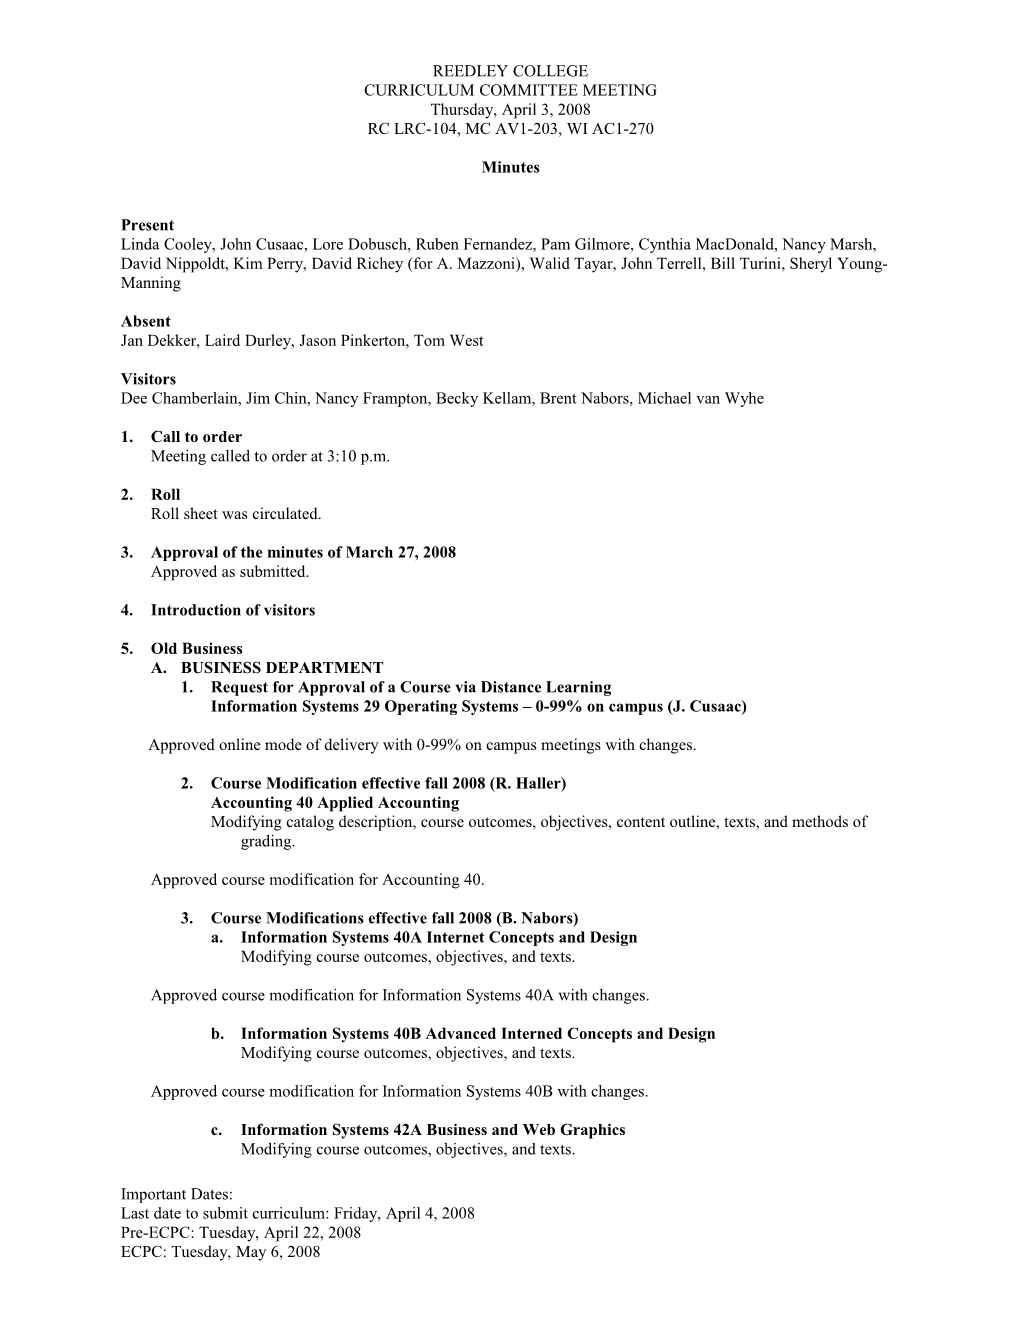 Curriculum Committee Minutes